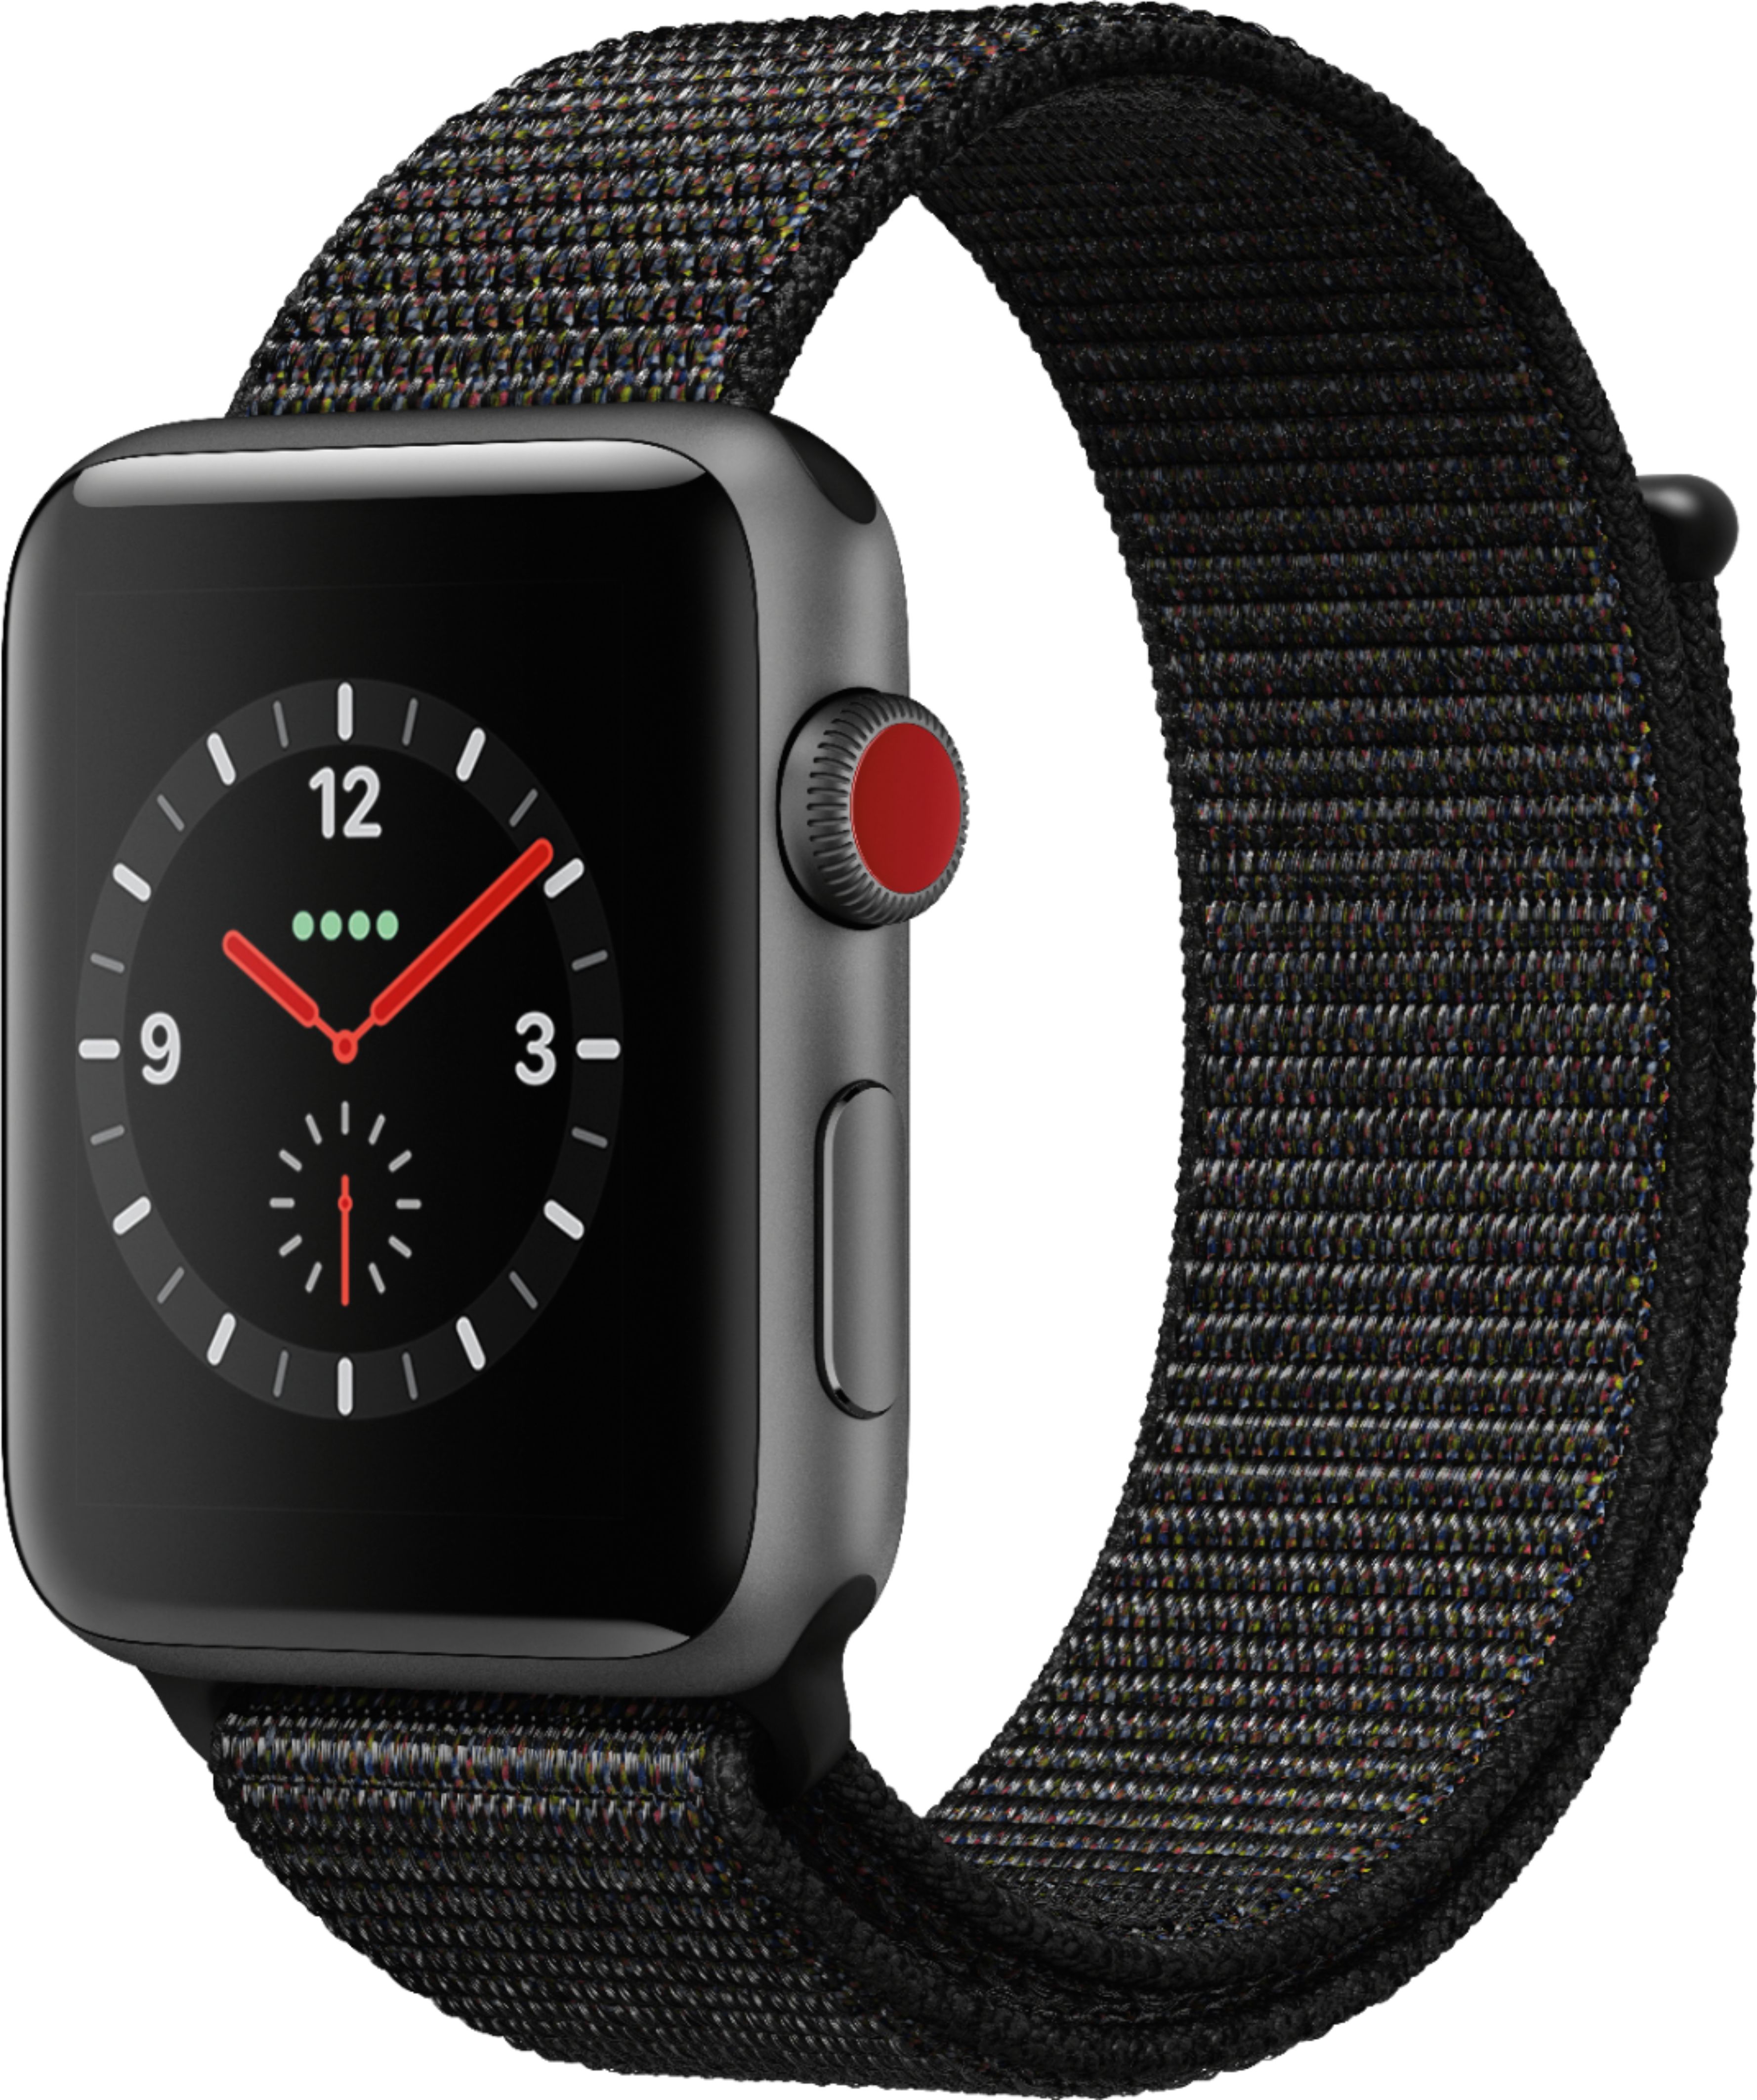 SALE100%新品】 Apple Watch - AppleWatch Series3 aluminum38mm